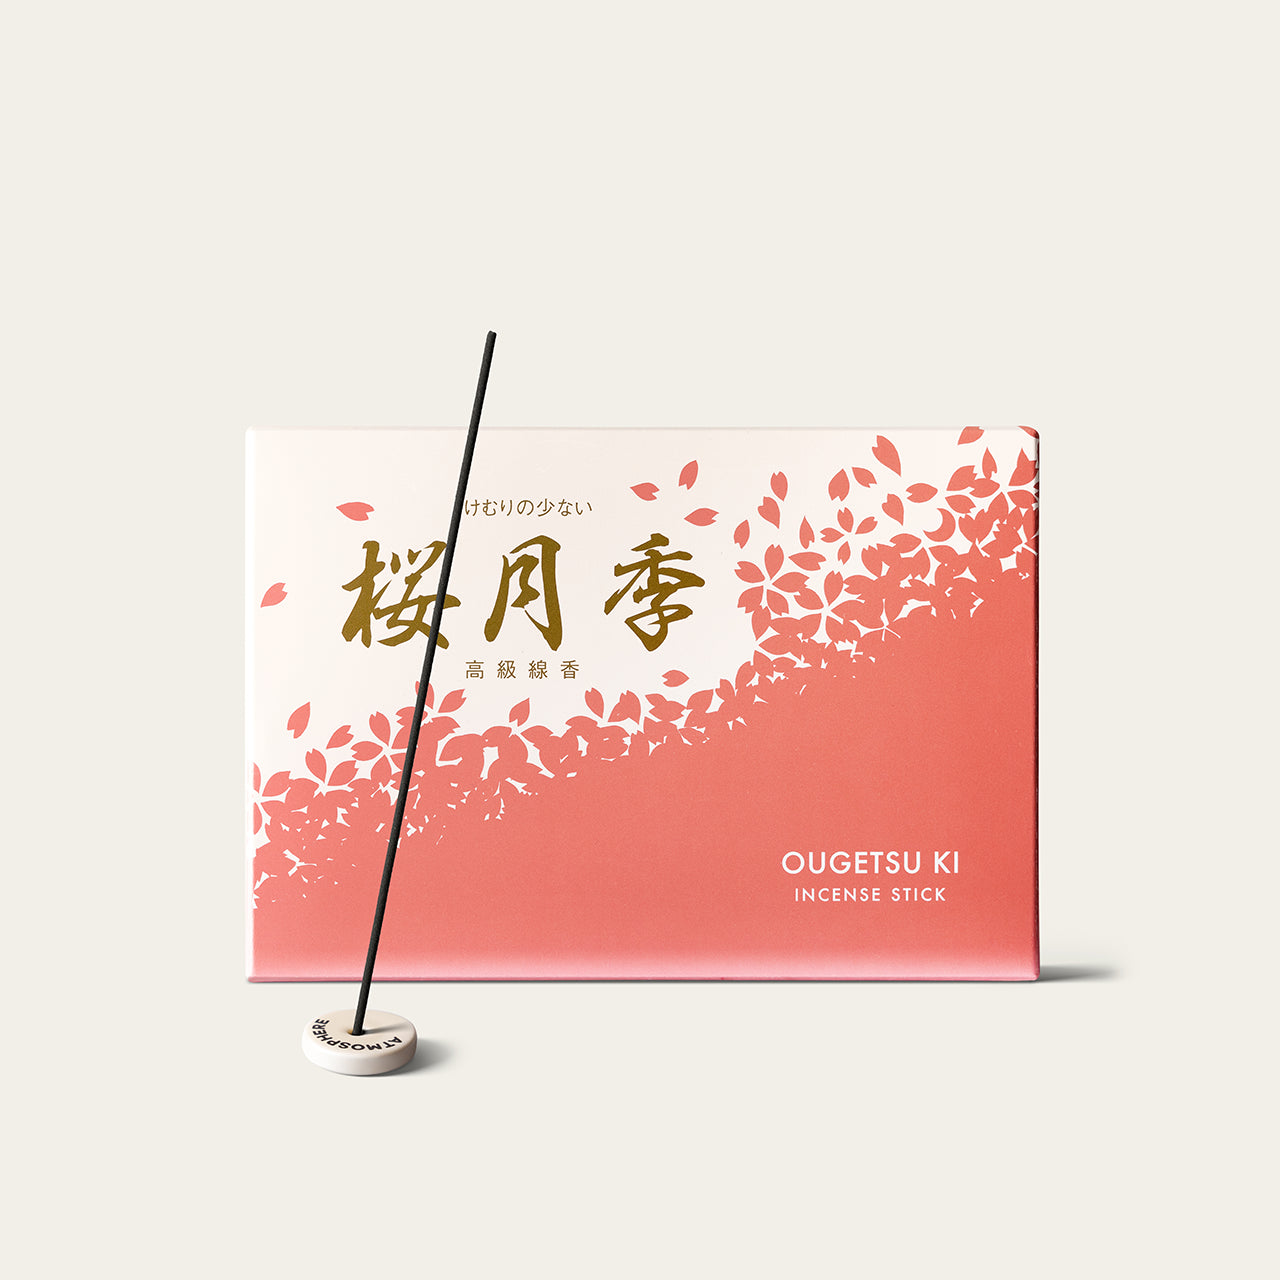 Gyokushodo Ougetsuki Moonflower Japanese incense sticks (500 sticks) with Atmosphere ceramic incense holder